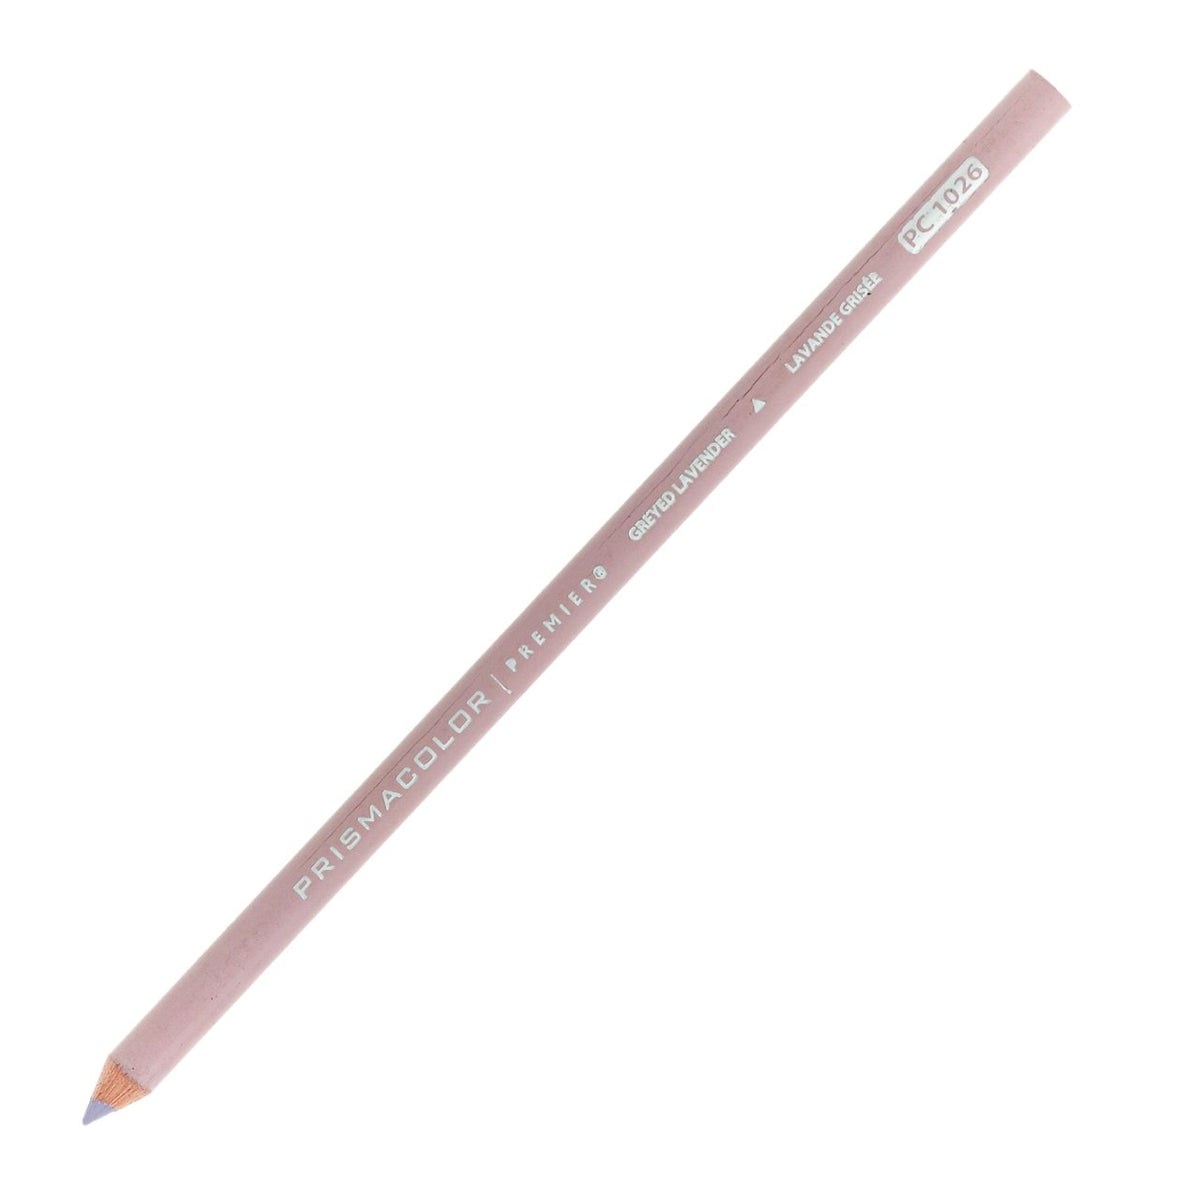 Prismacolor Premier Colored Pencil - Gray Lavender 1026 - merriartist.com